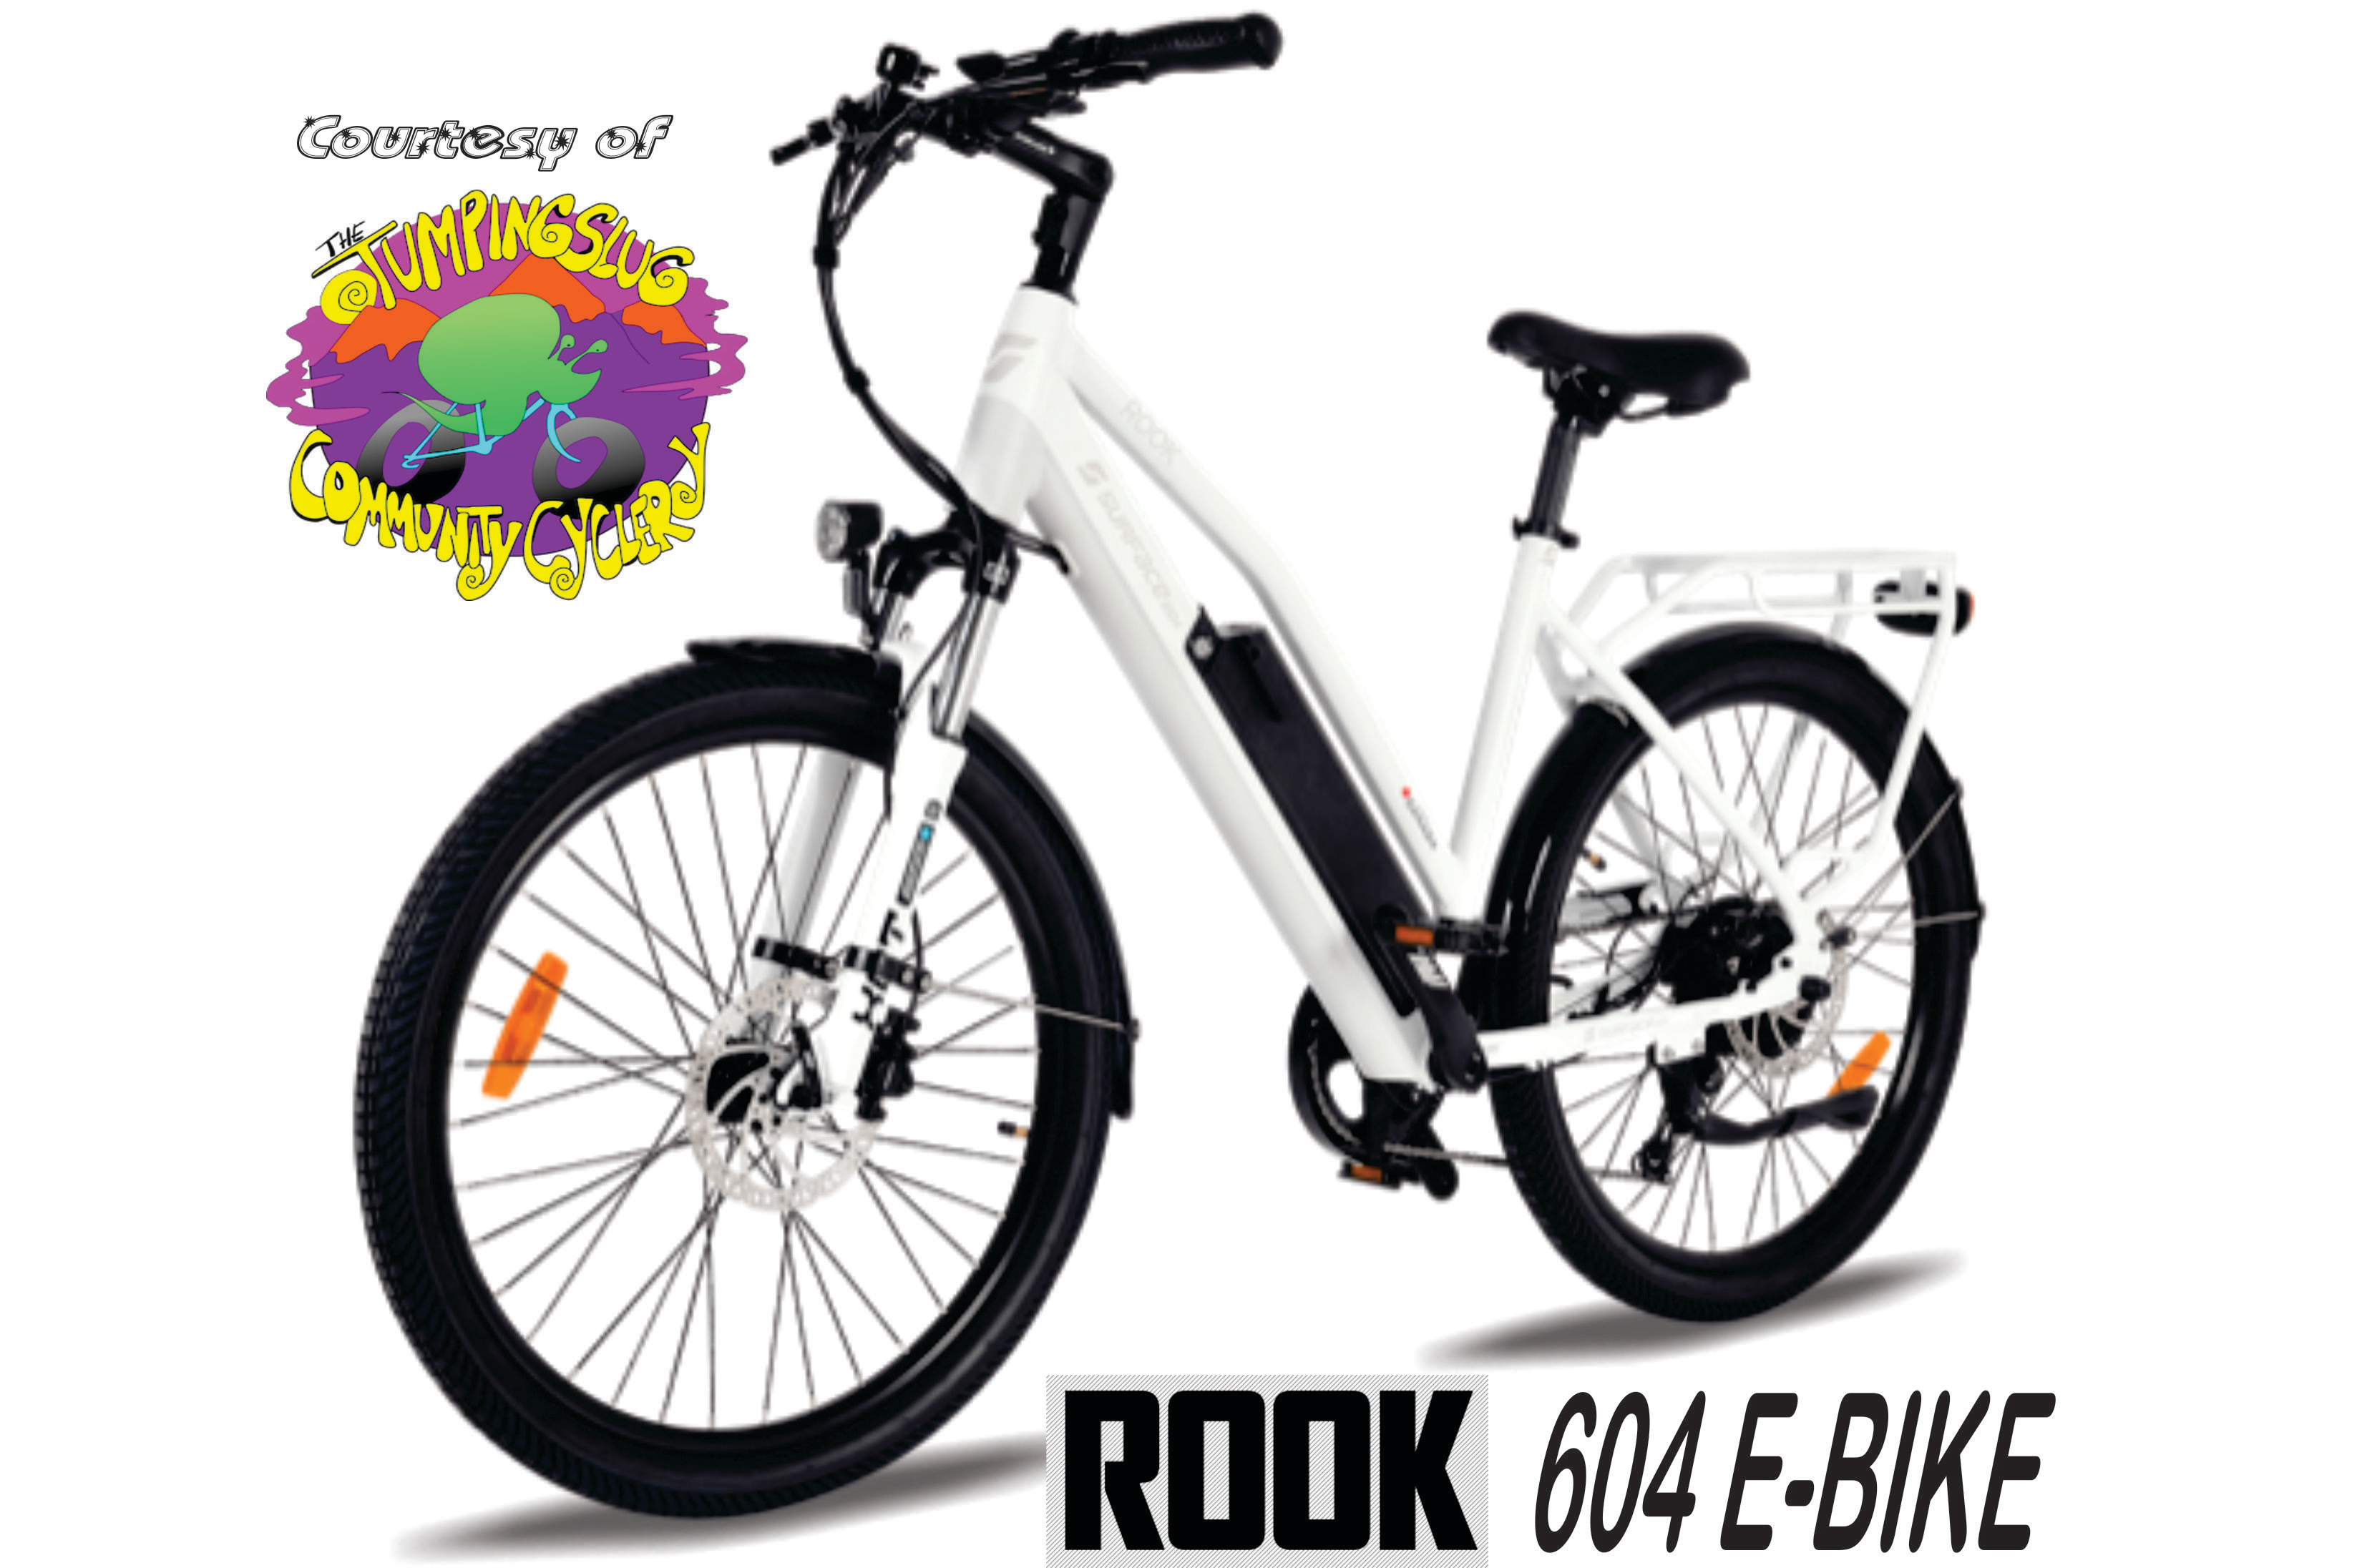 ROOK 604 E-Bike Sponsored by Jumping Slug Community Cyclery